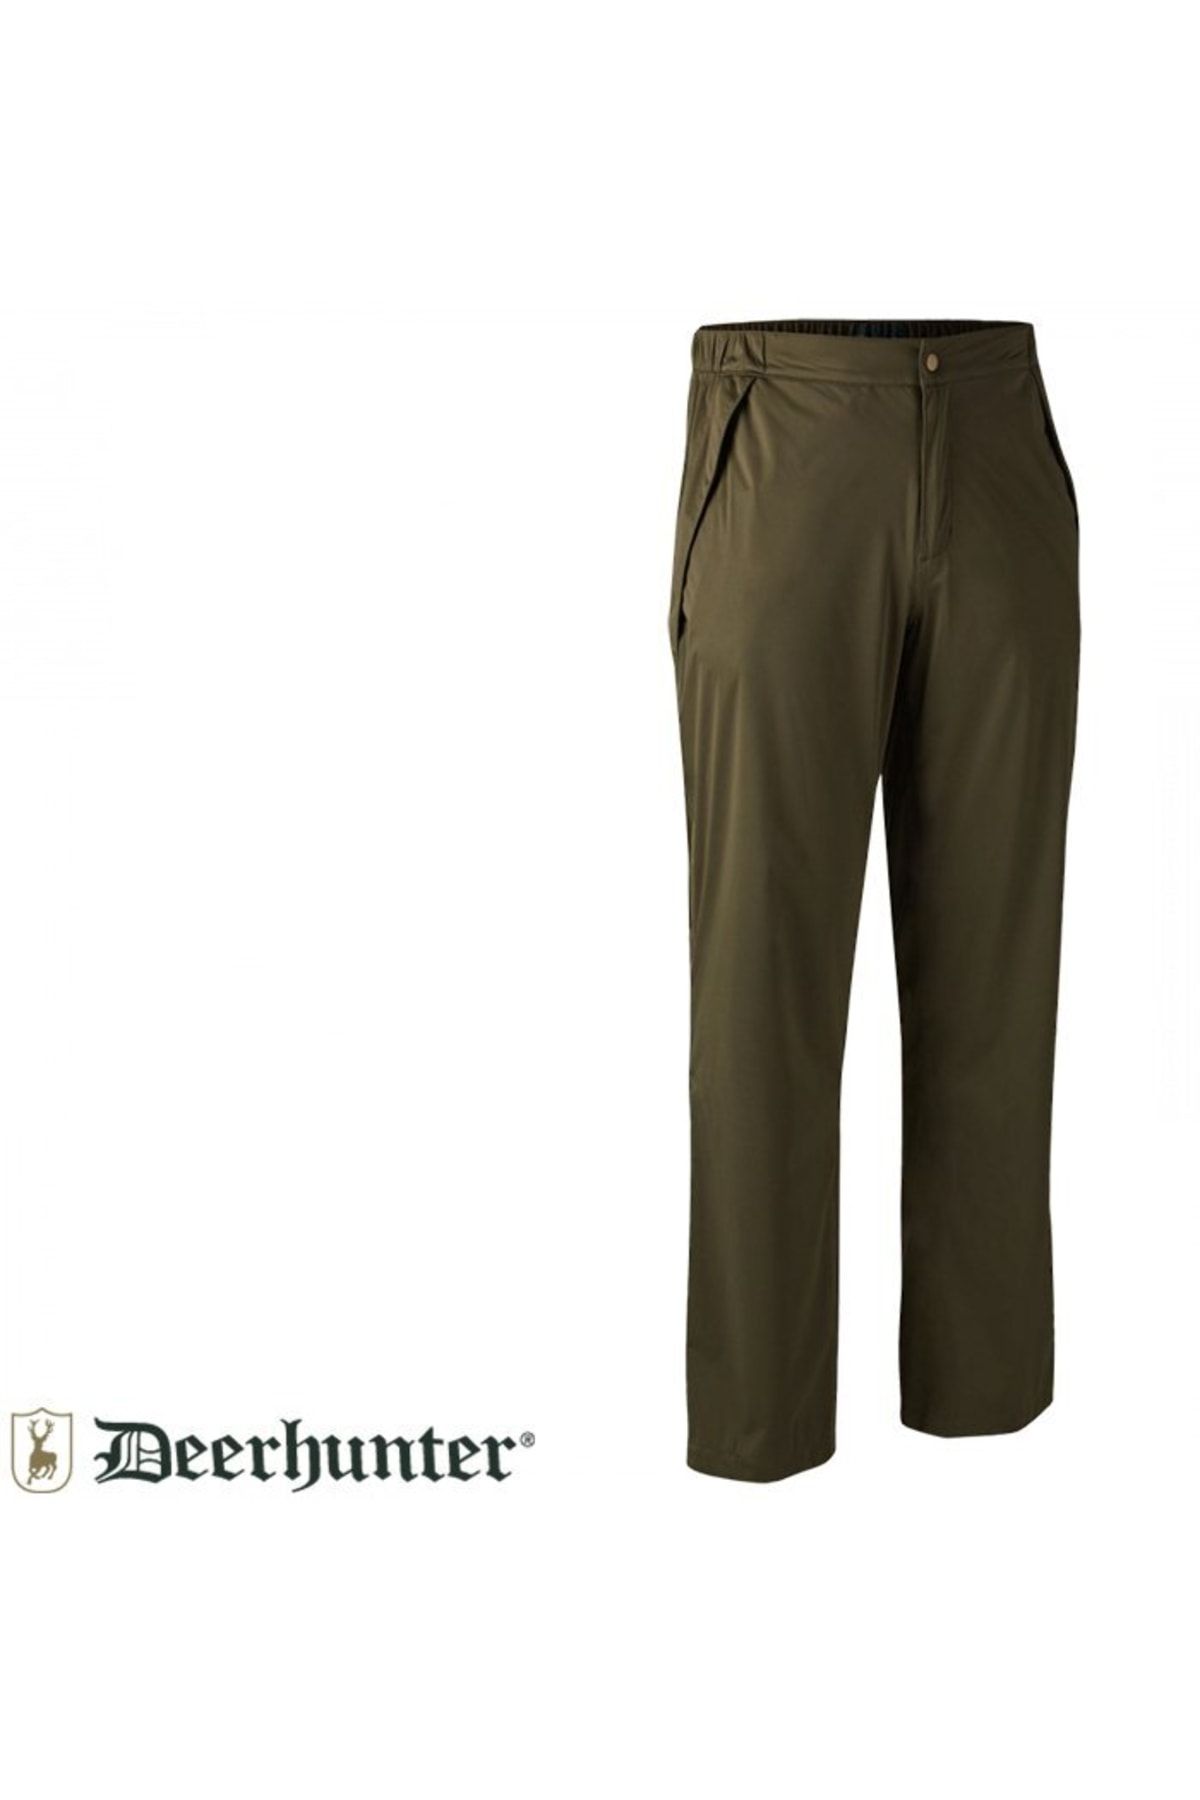 Deerhunter Thunder Pantolon Yeşil - L